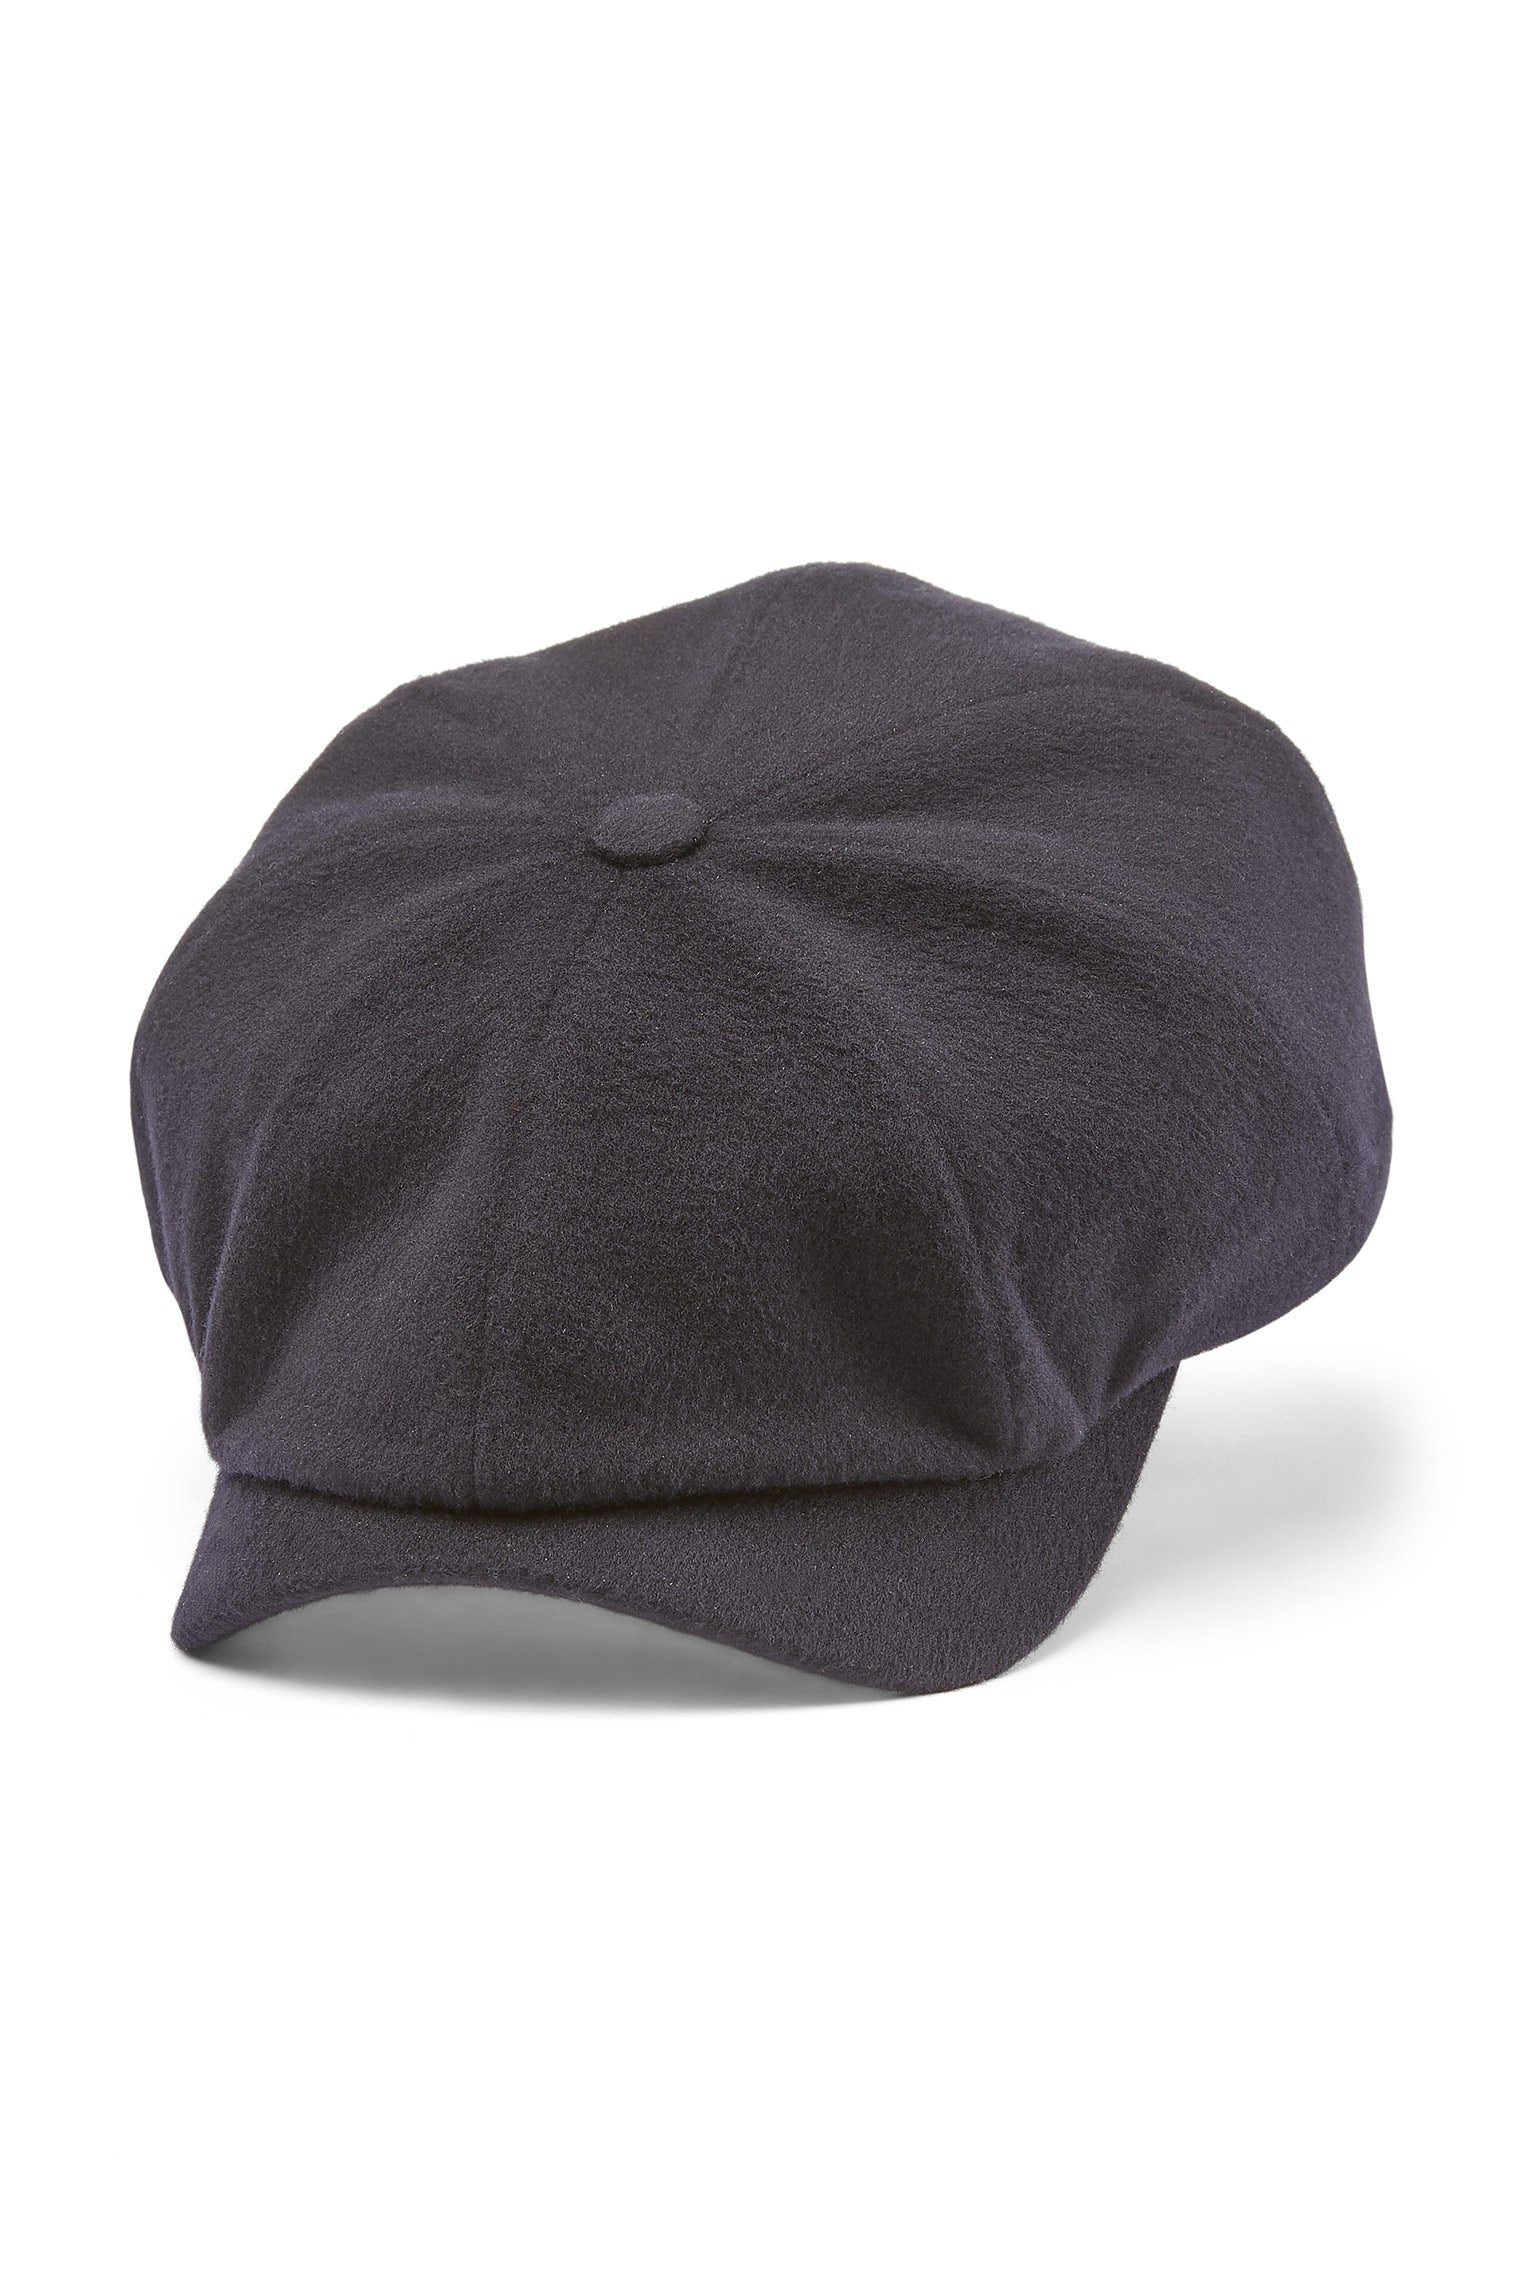 Escorial Wool Newsboy Cap - Men's Hats - Lock & Co. Hatters London UK